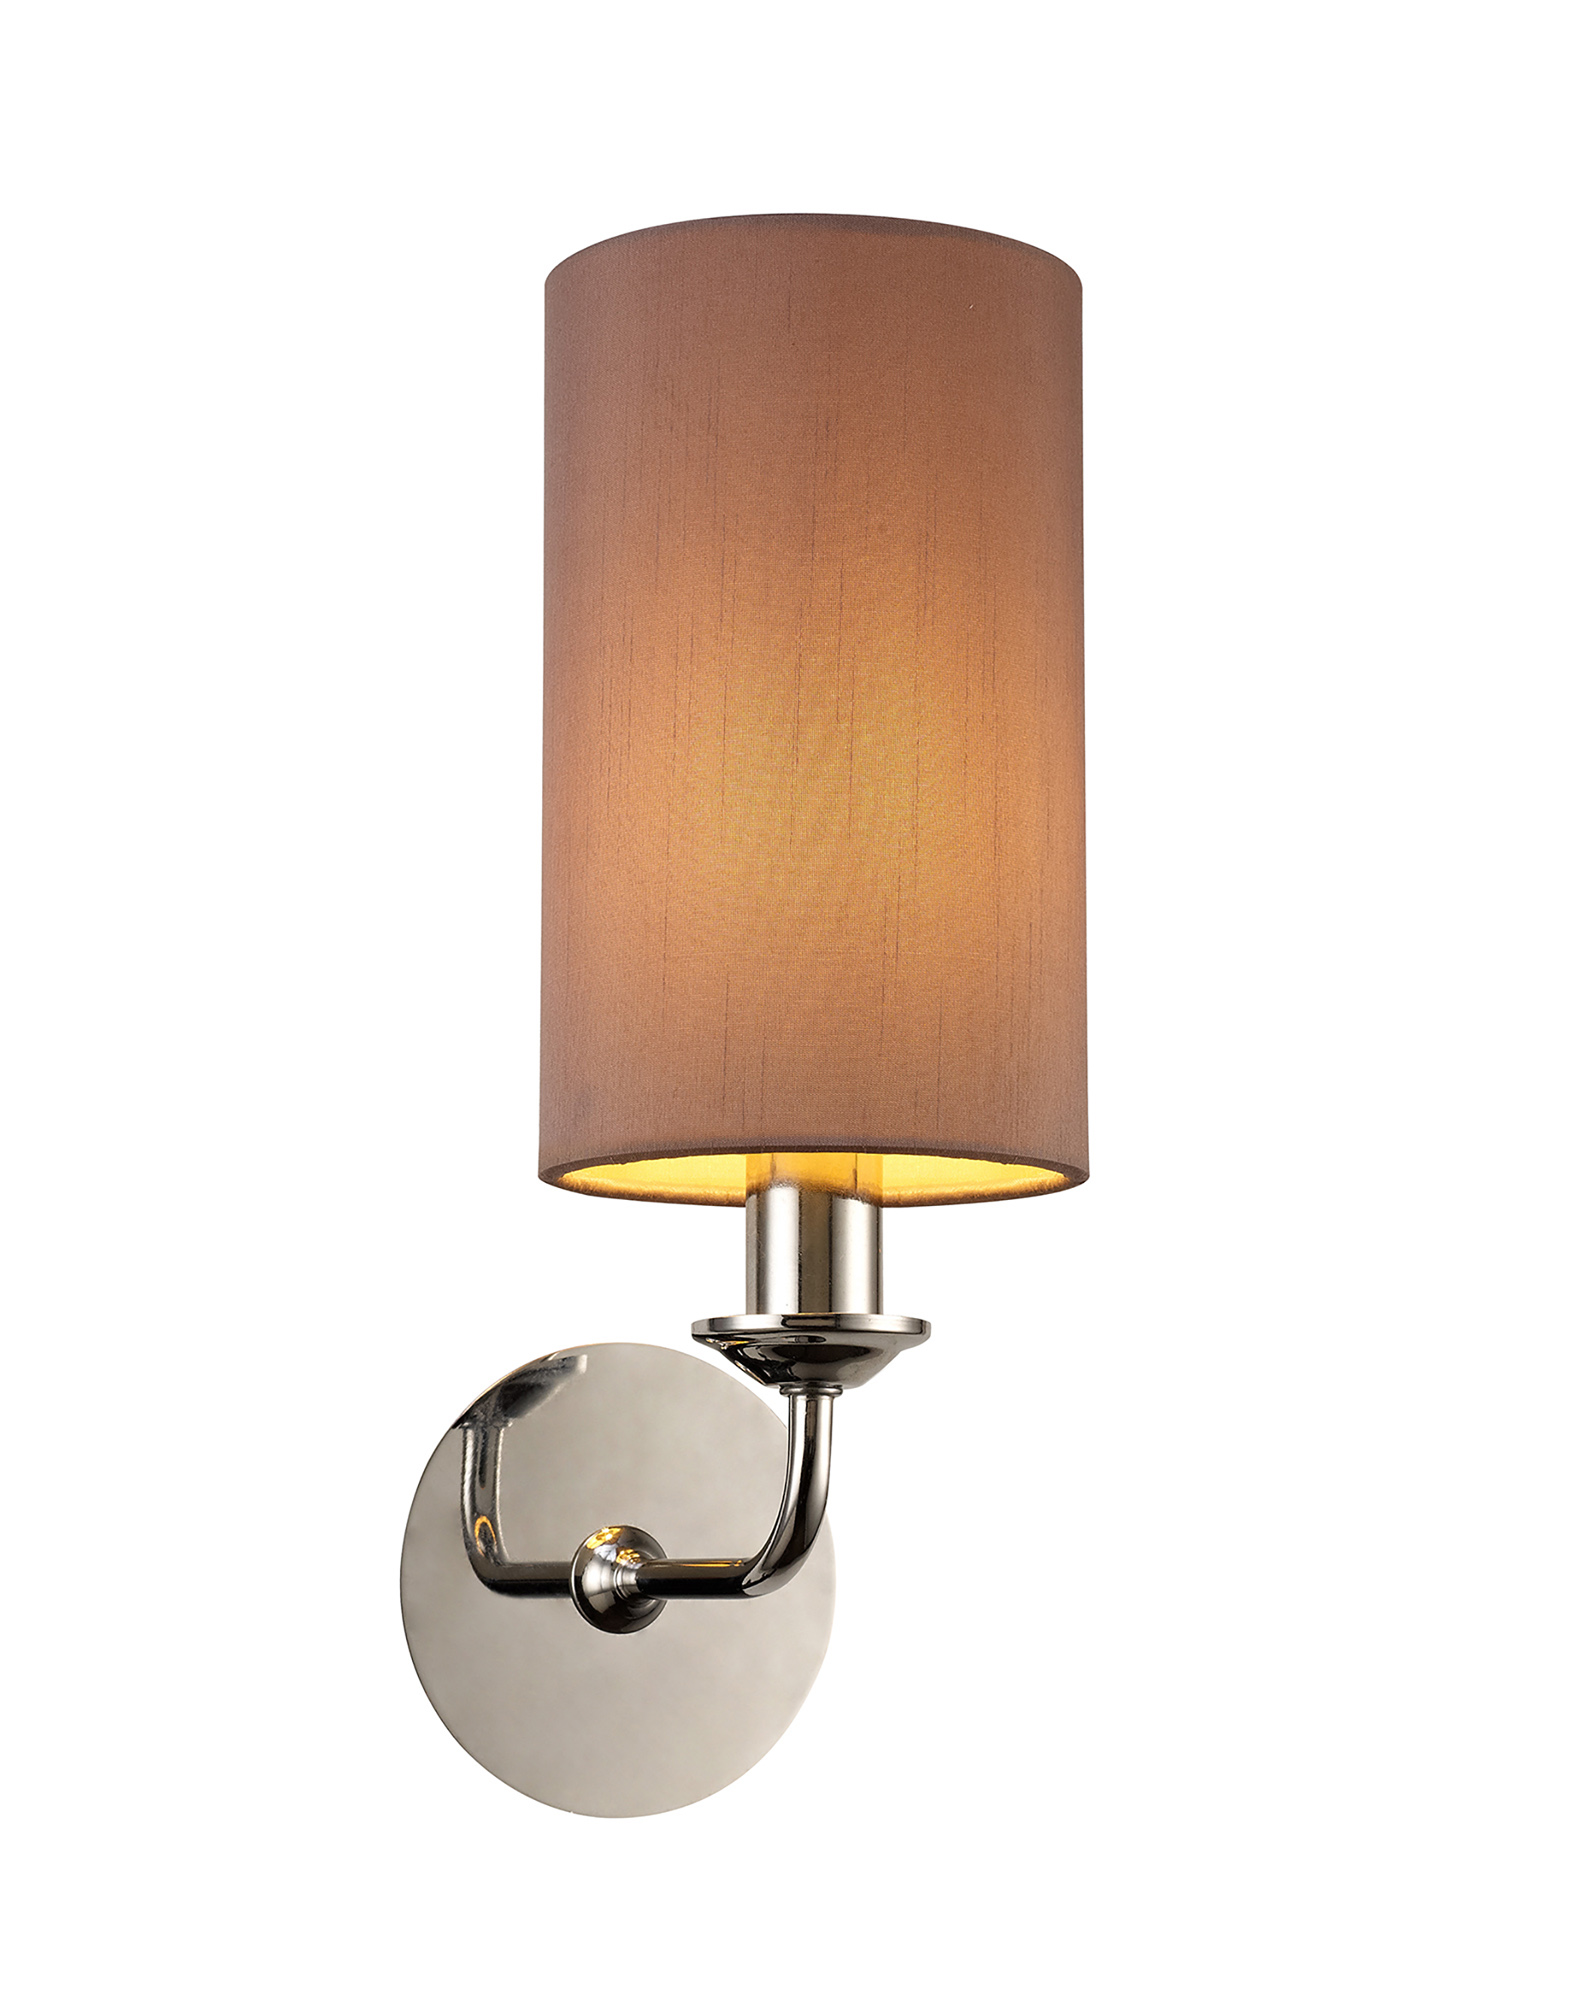 DK0018  Banyan Wall Lamp 1 Light Polished Chrome, Taupe/Halo Gold